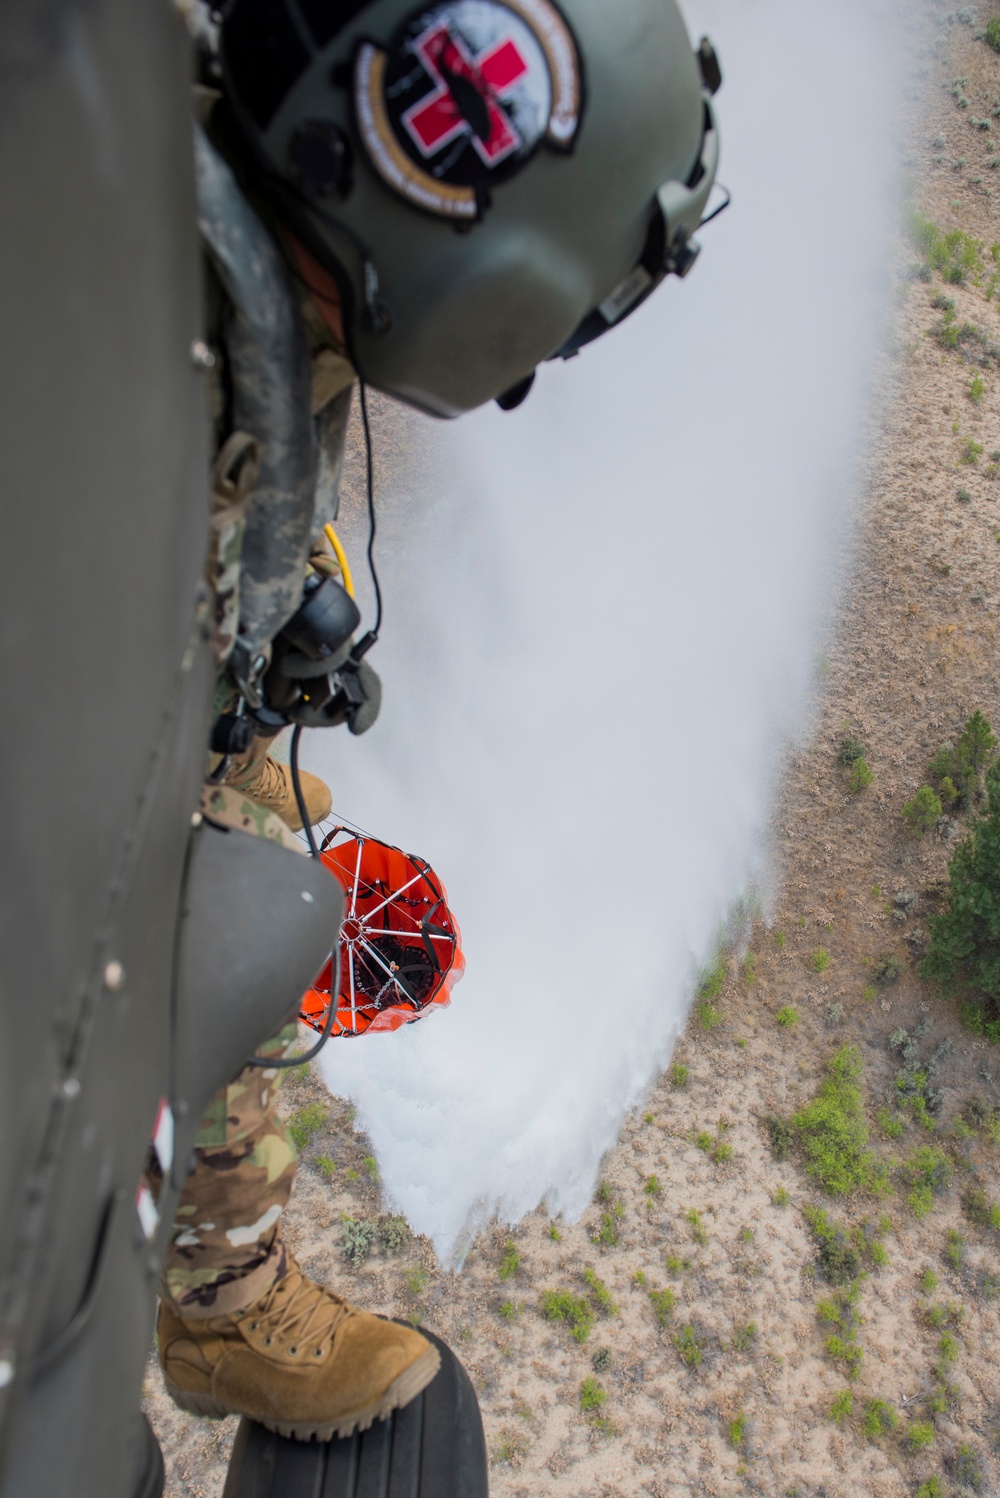 Idaho National Guard prepares to assist the California wildland fires